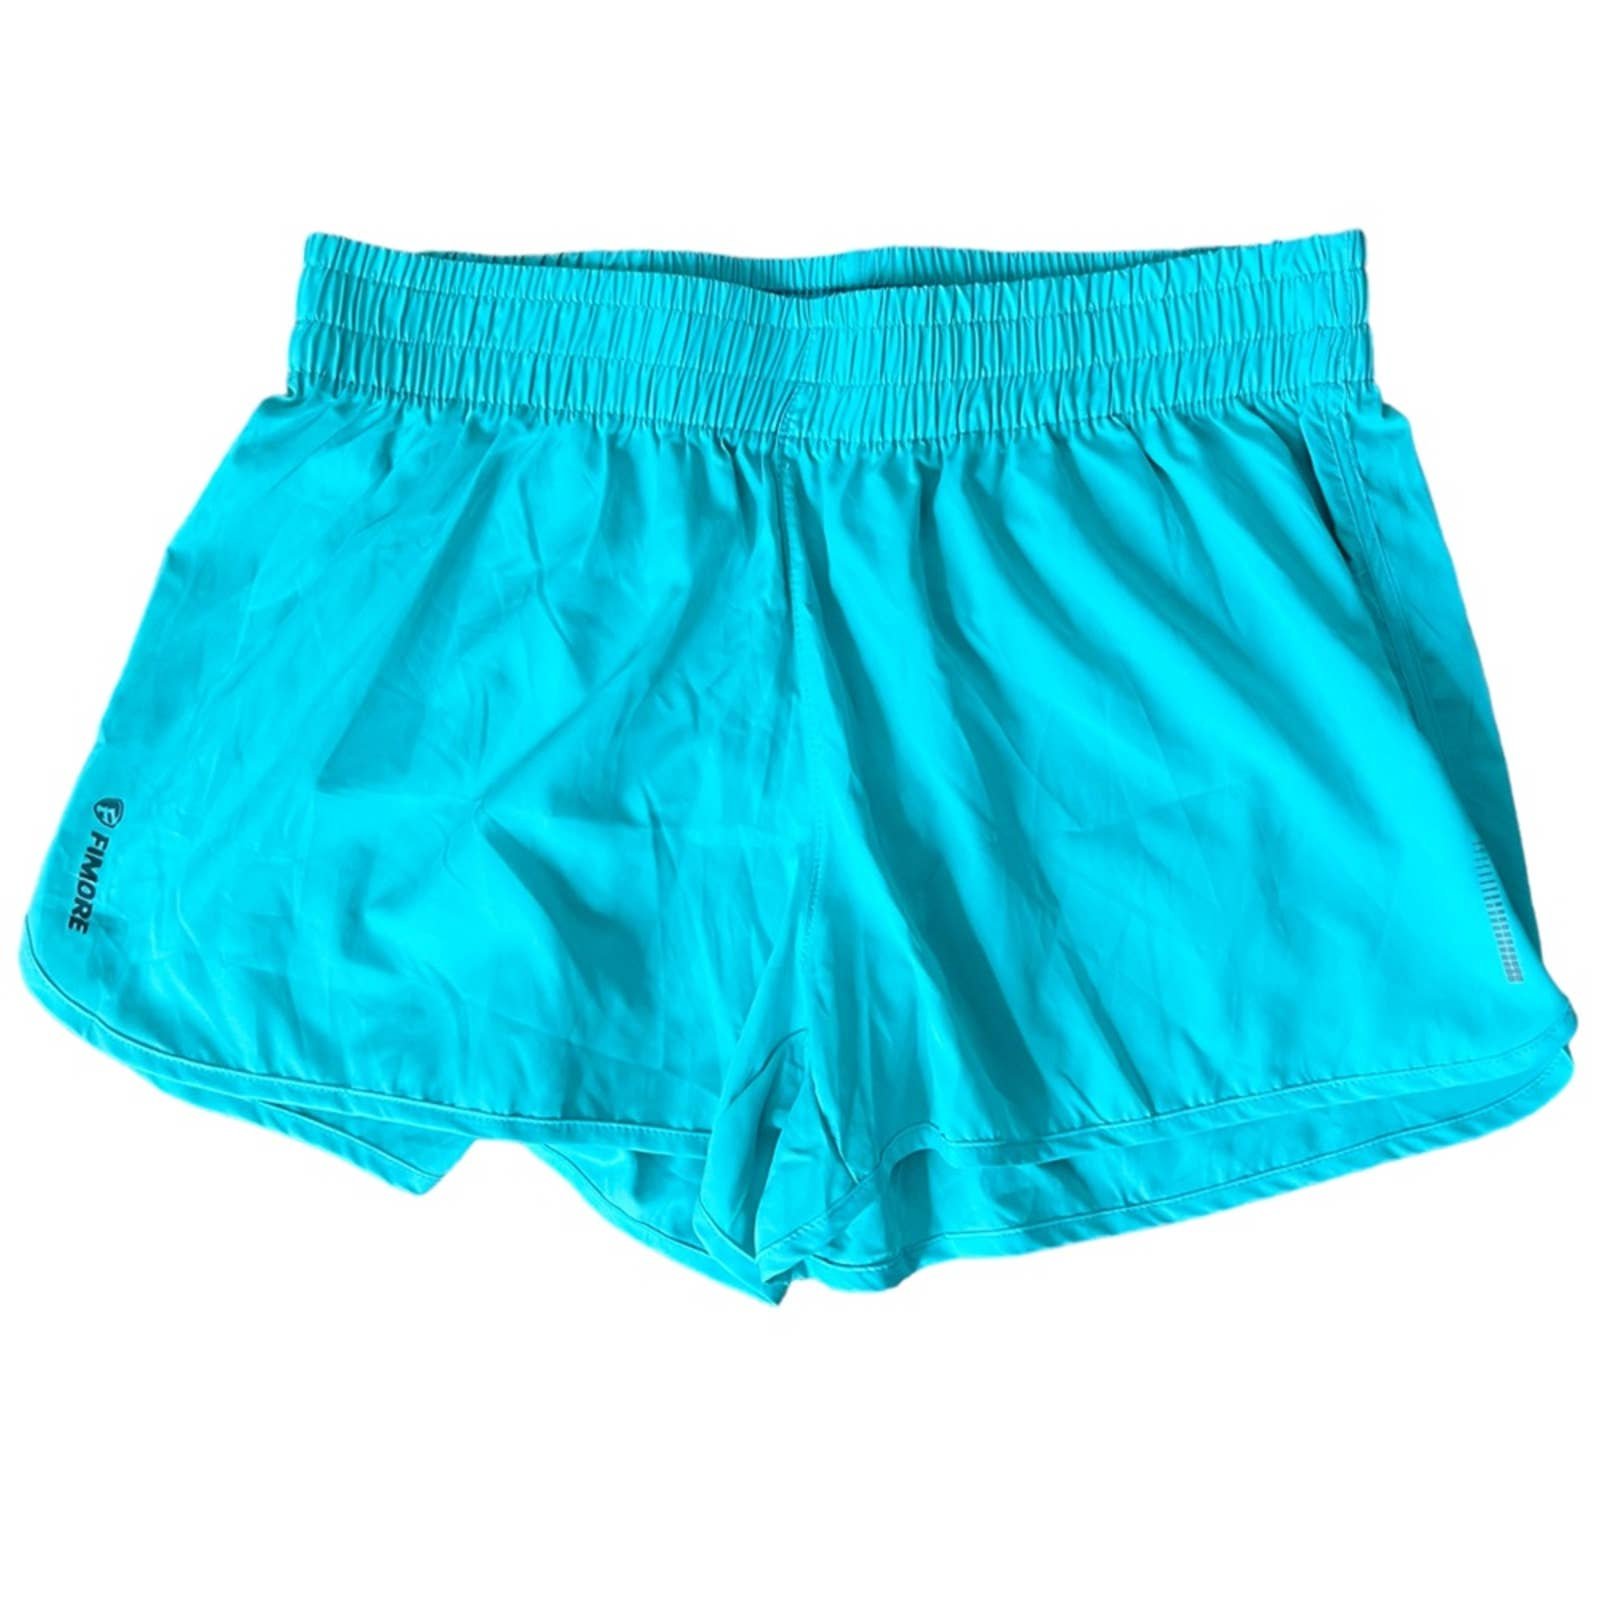 Beautiful Neon Blue Nylon Running Shorts LiuICco2E Online Shop